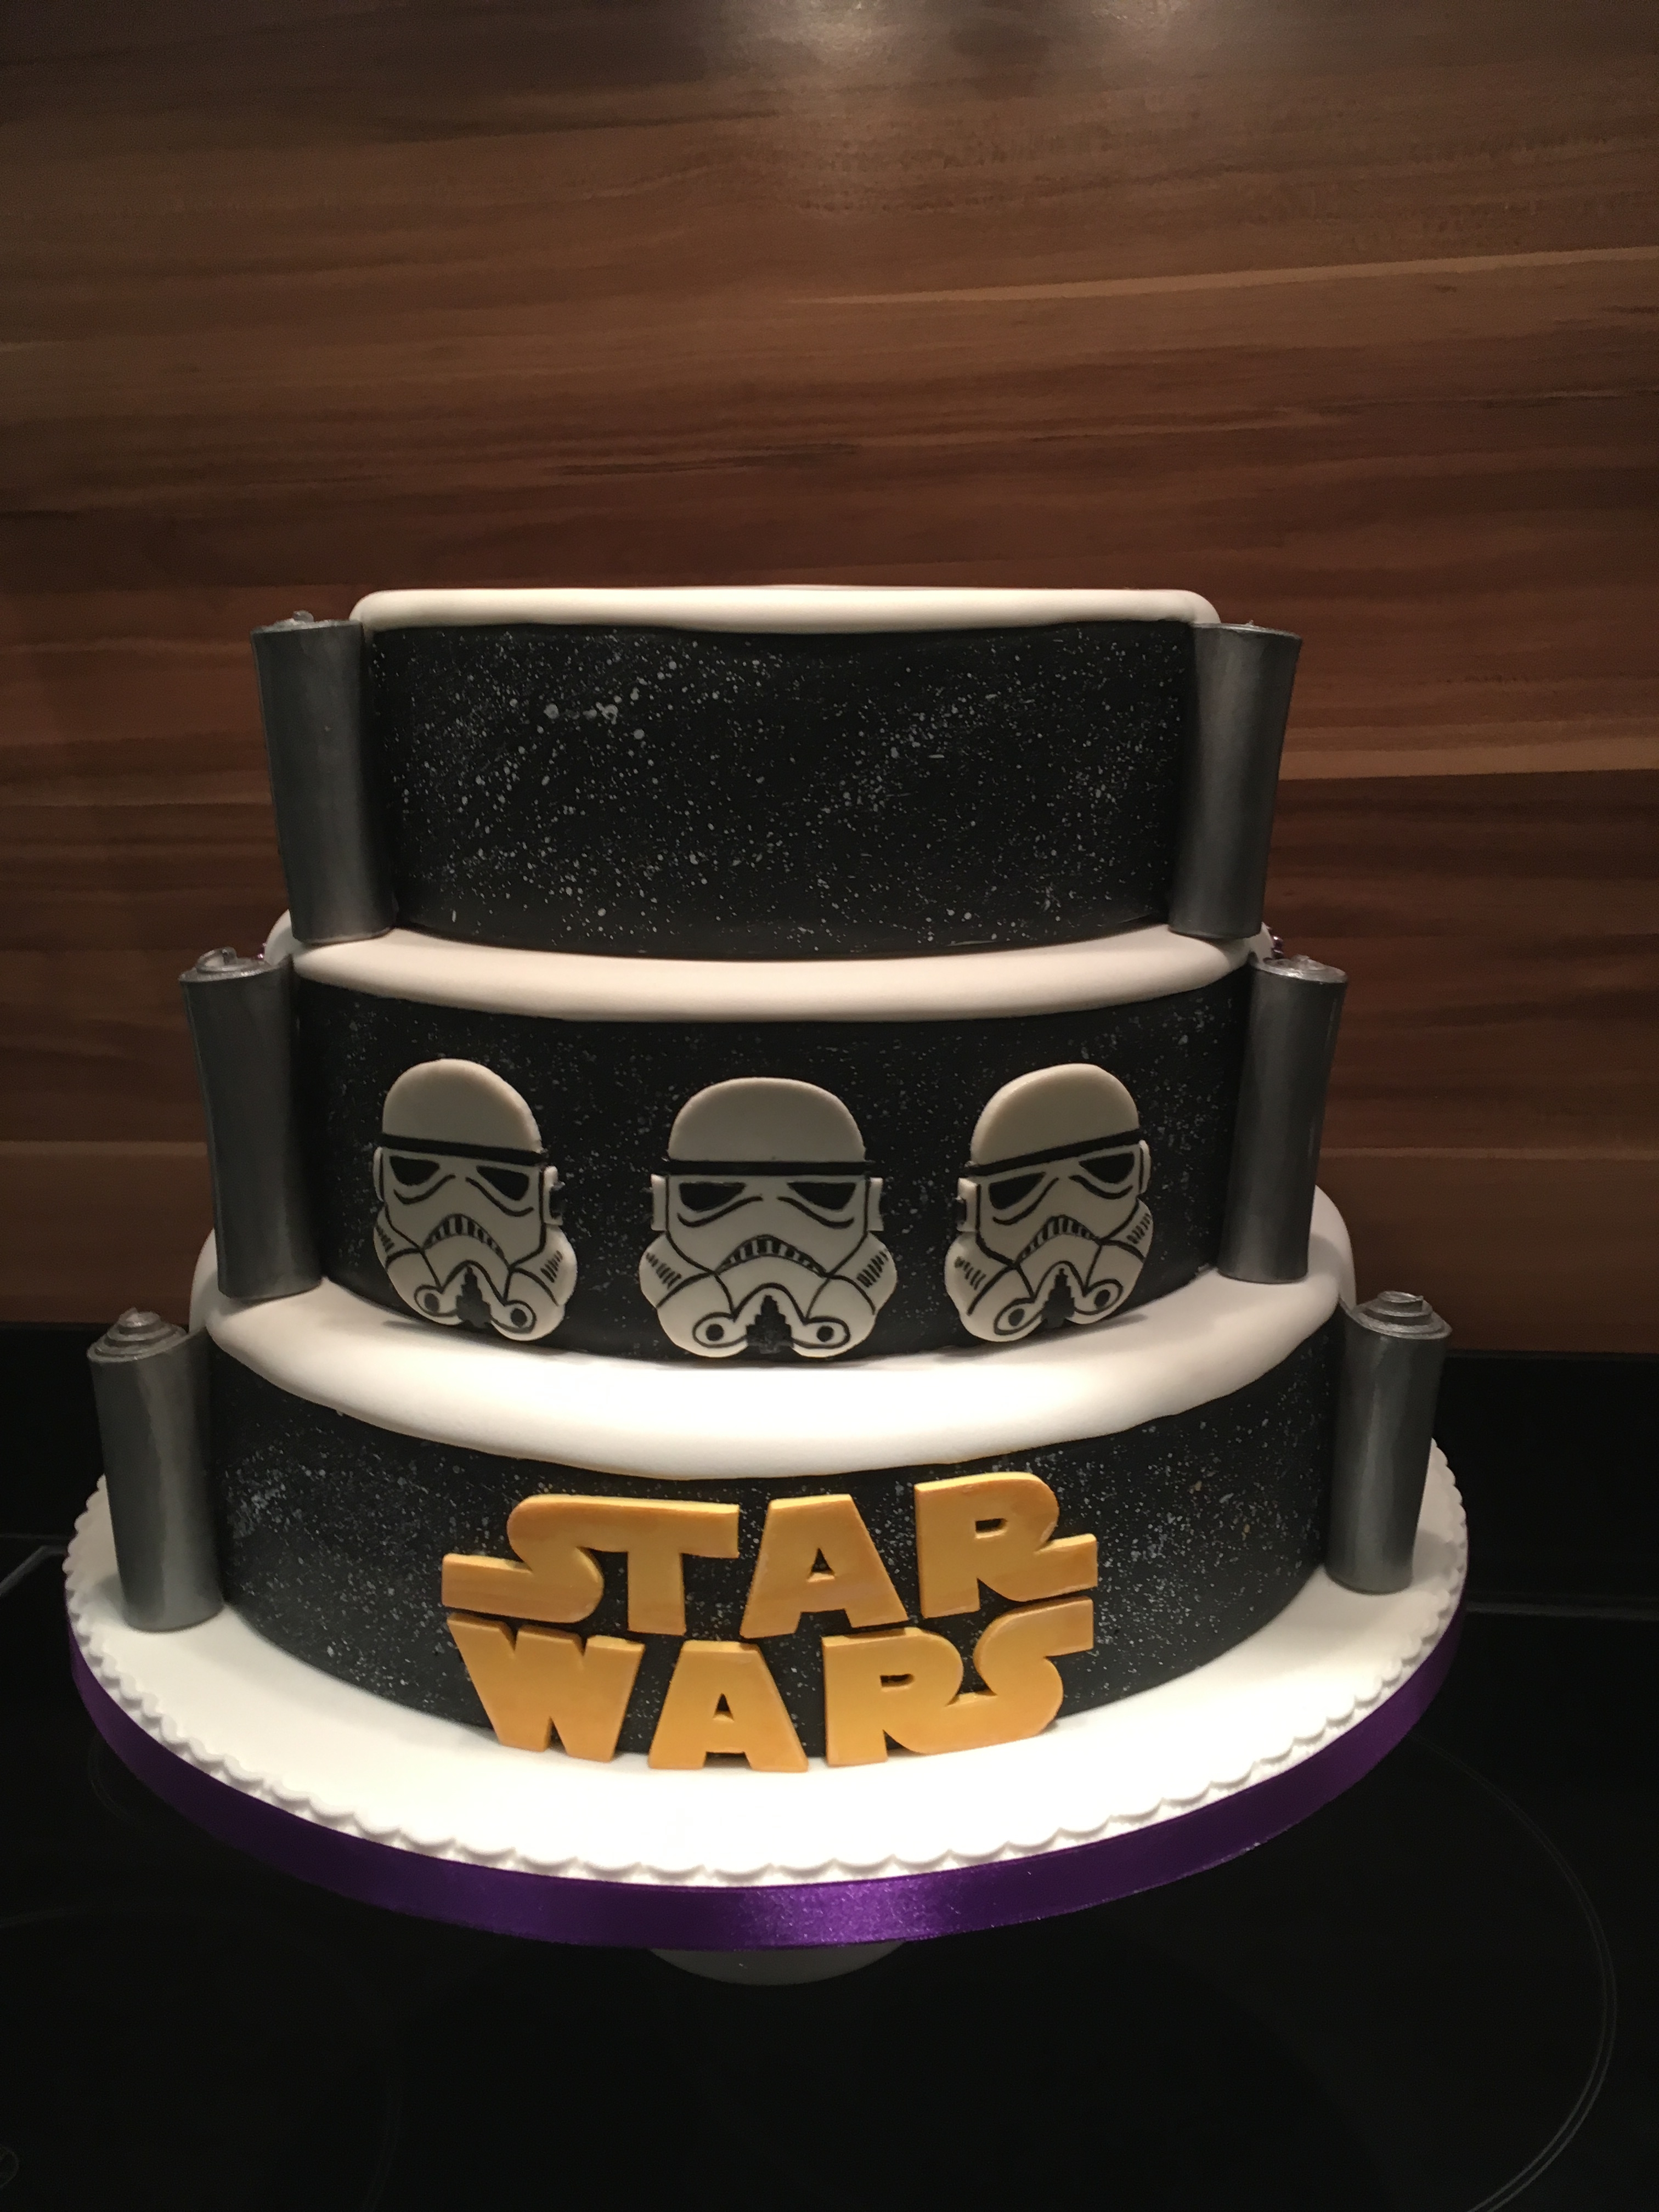 Star Wars themed wedding cake